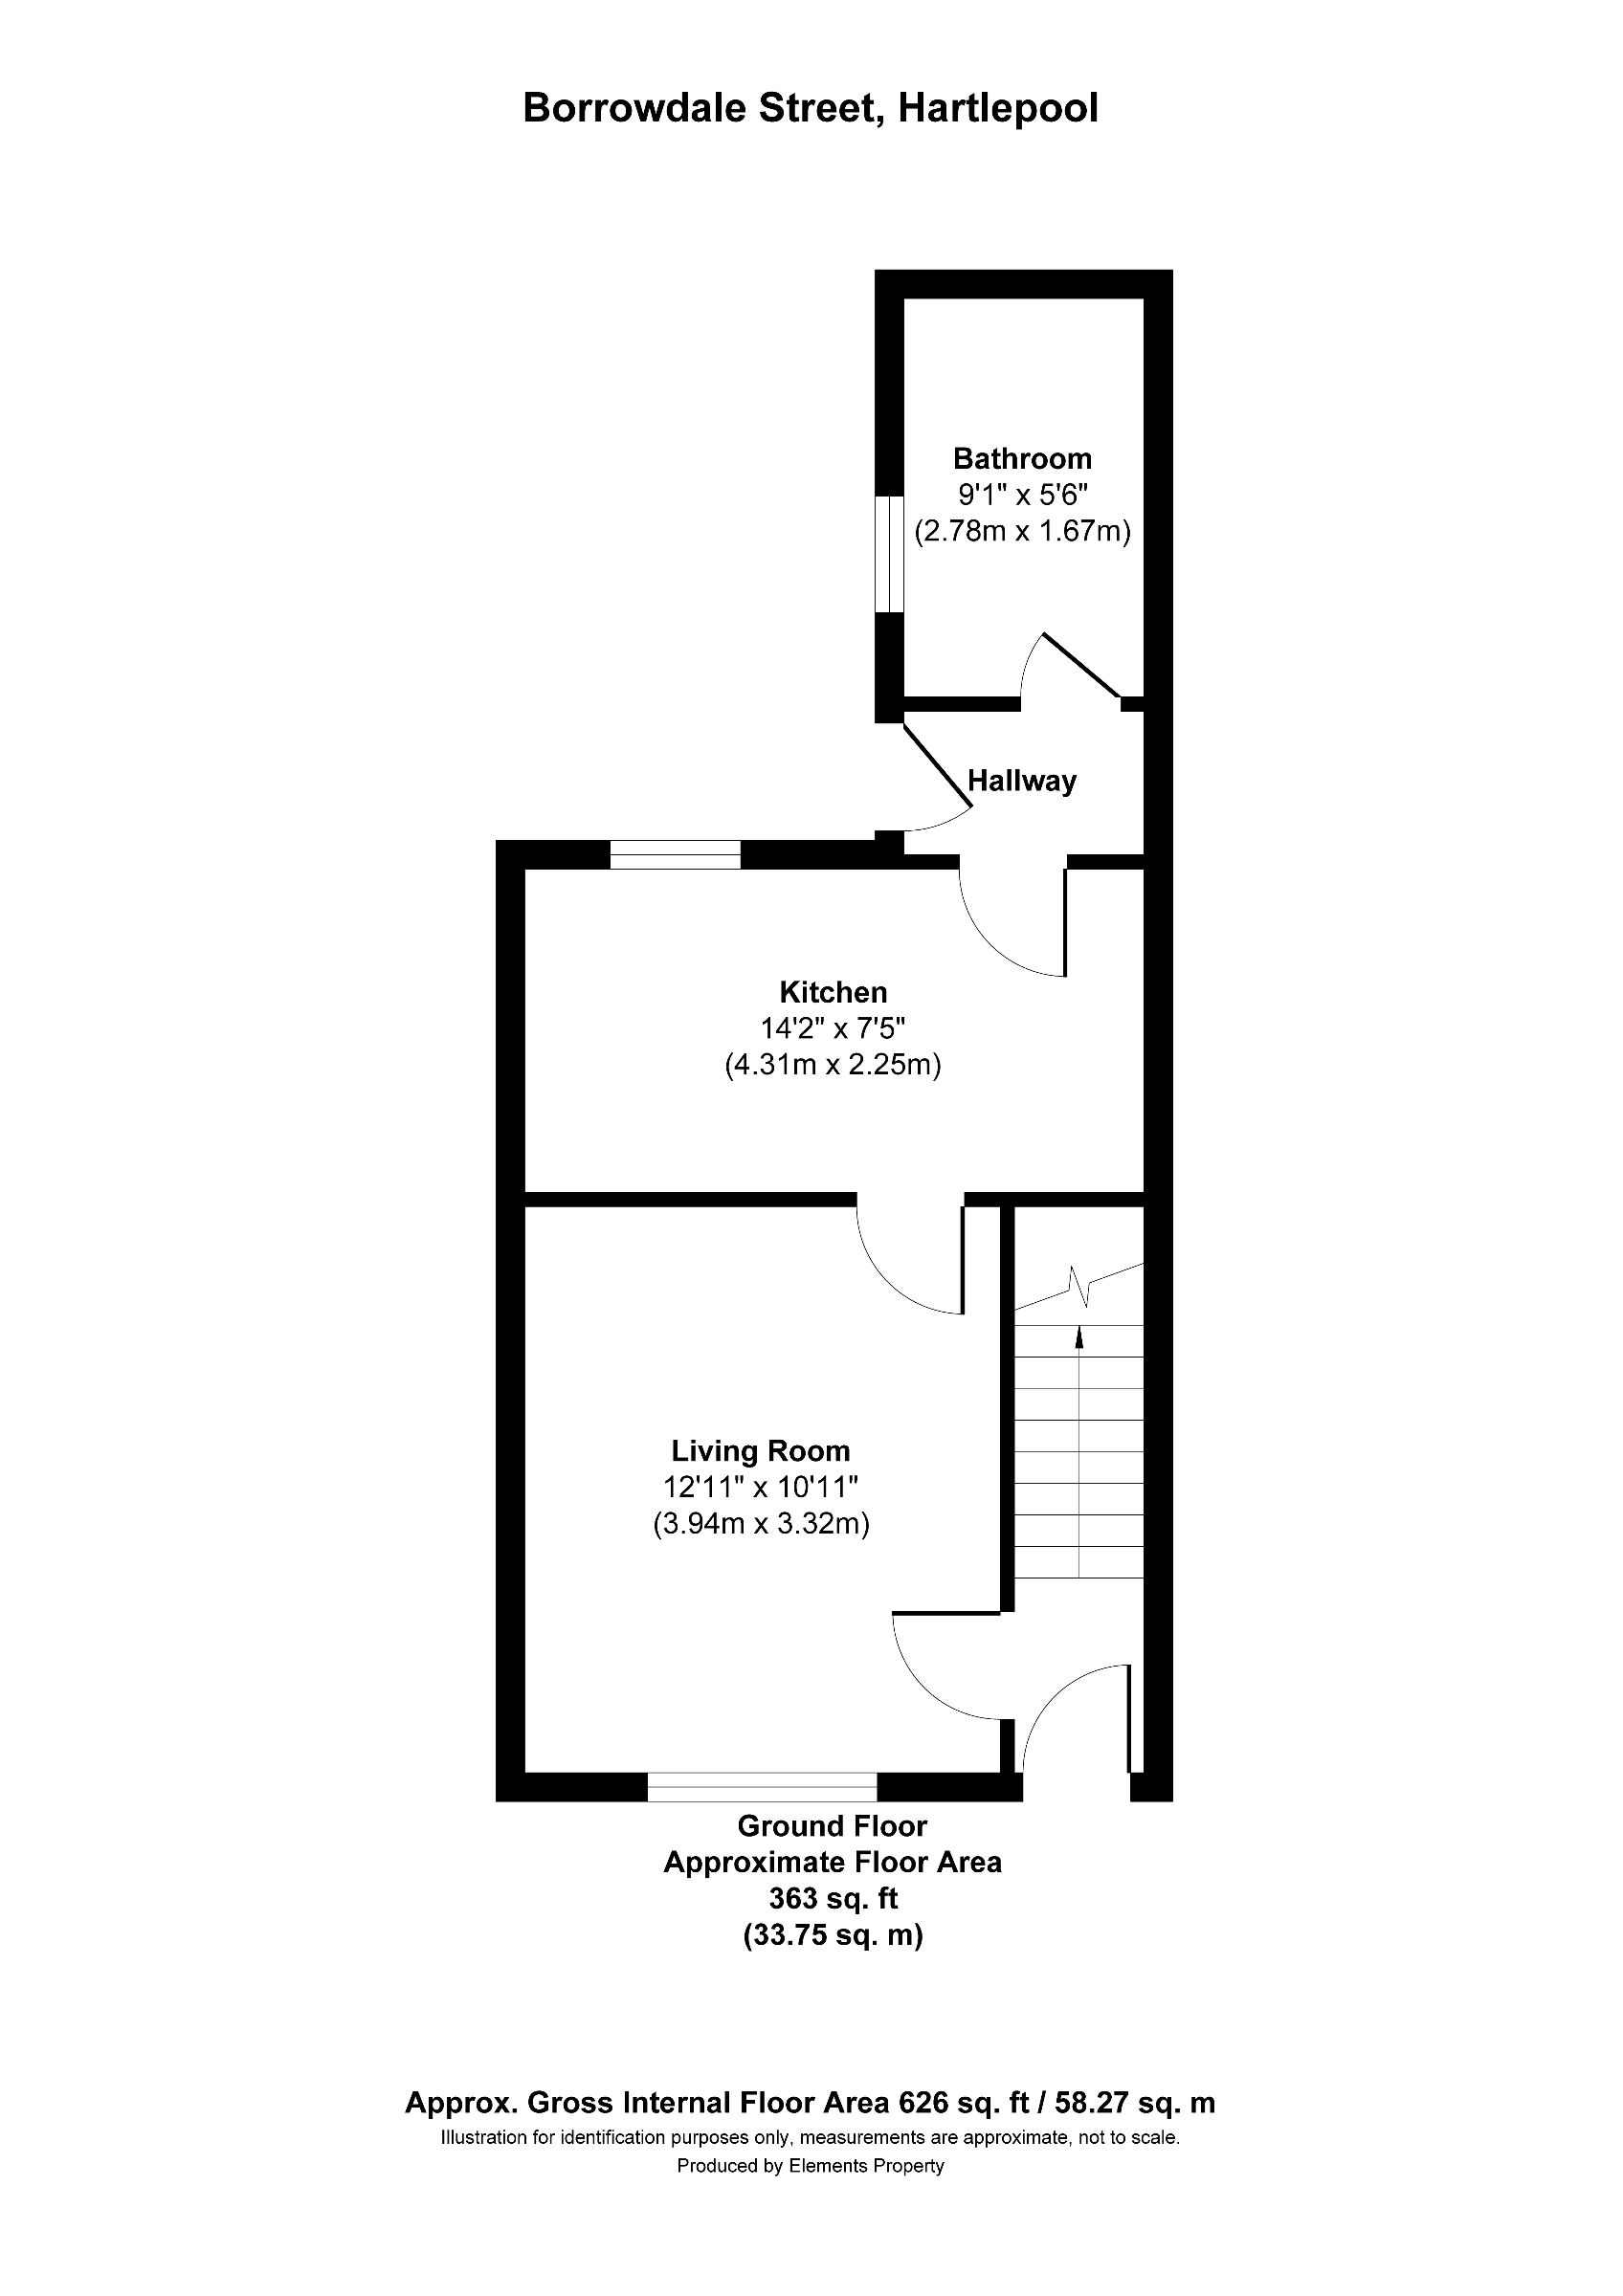 3 bed terraced house for sale in Borrowdale Street, Hartlepool - Property floorplan